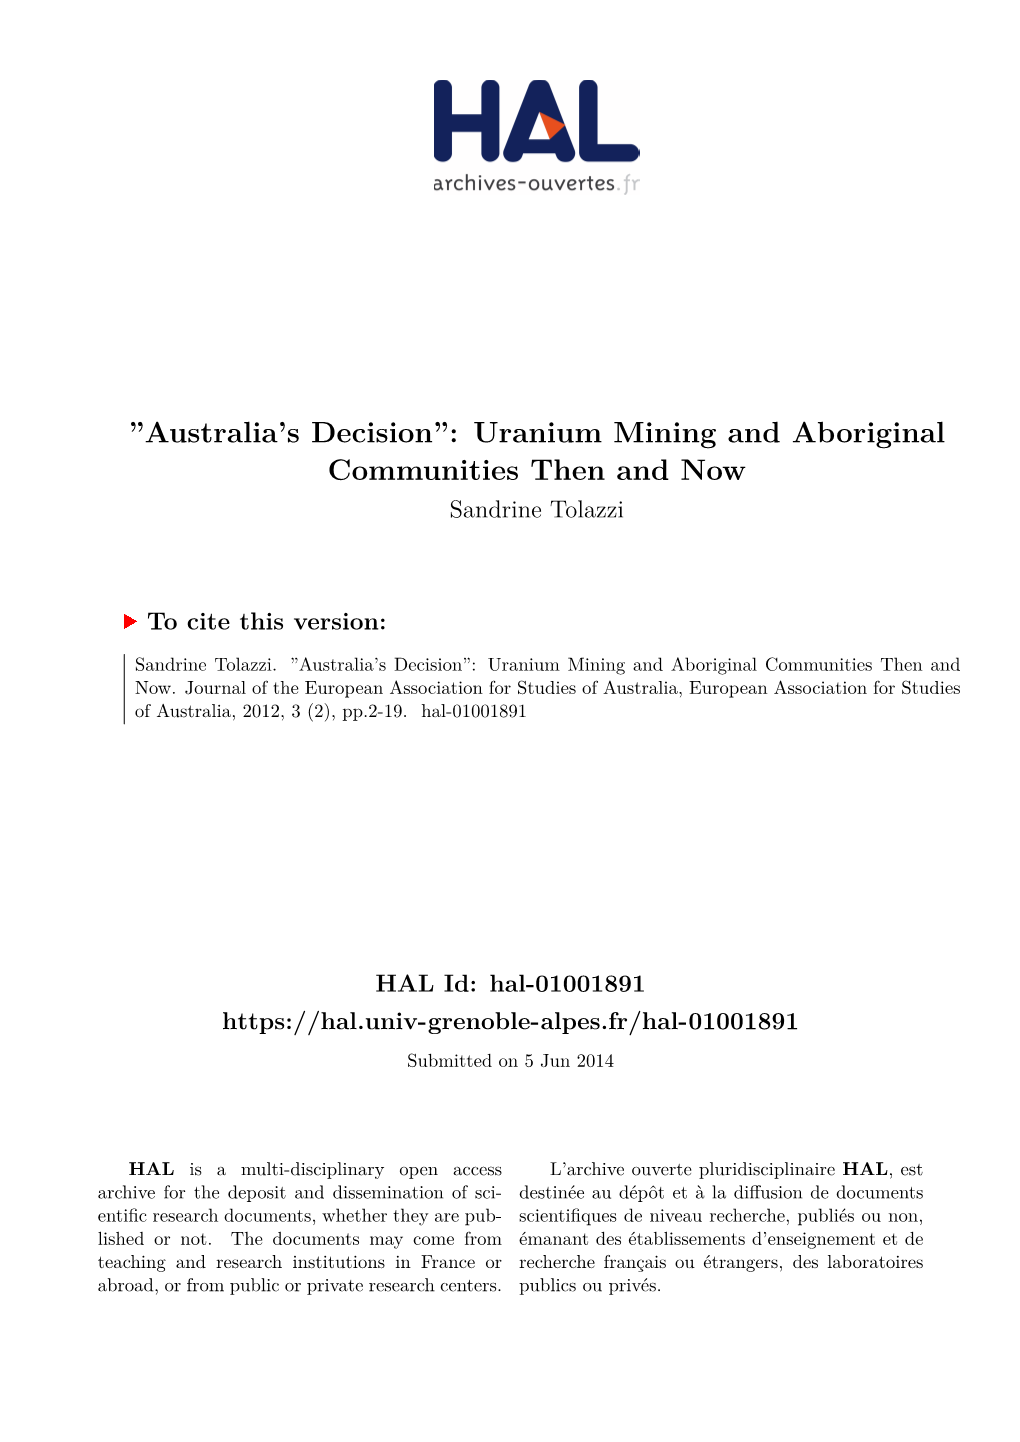 Uranium Mining and Aboriginal Communities Then and Now Sandrine Tolazzi